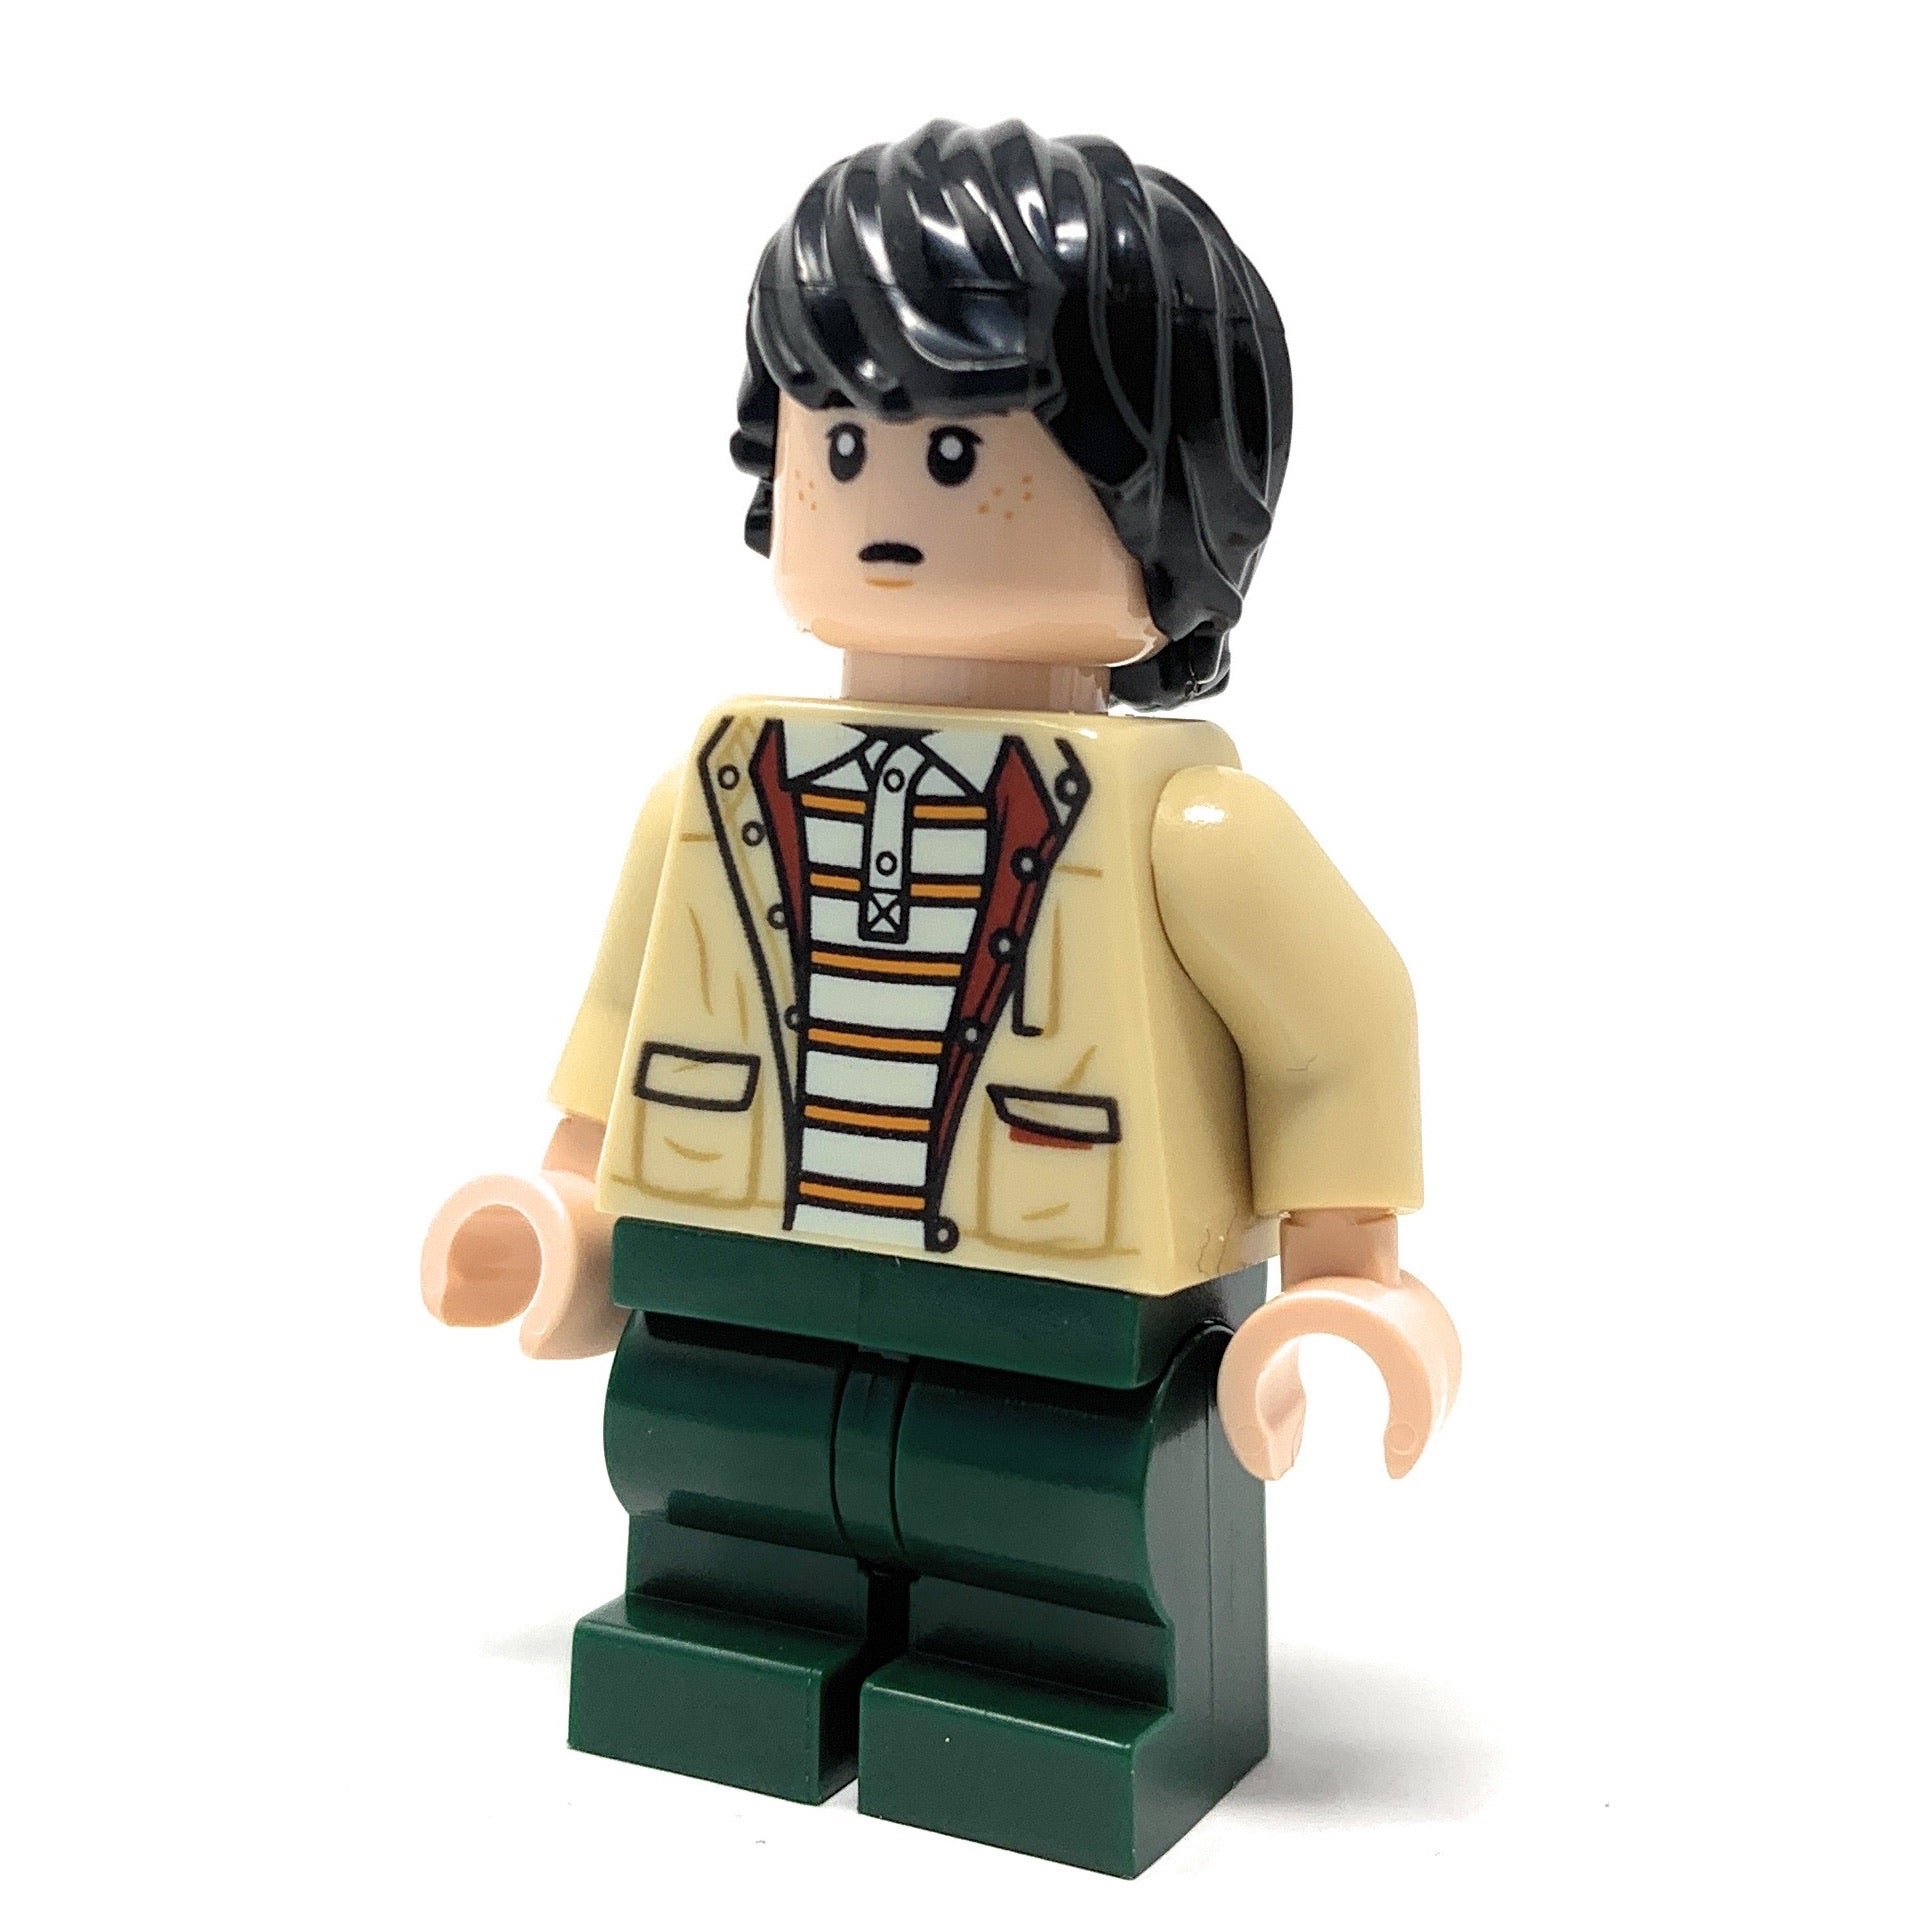 Mike Wheeler - LEGO Stranger Things Minifigure (2019)